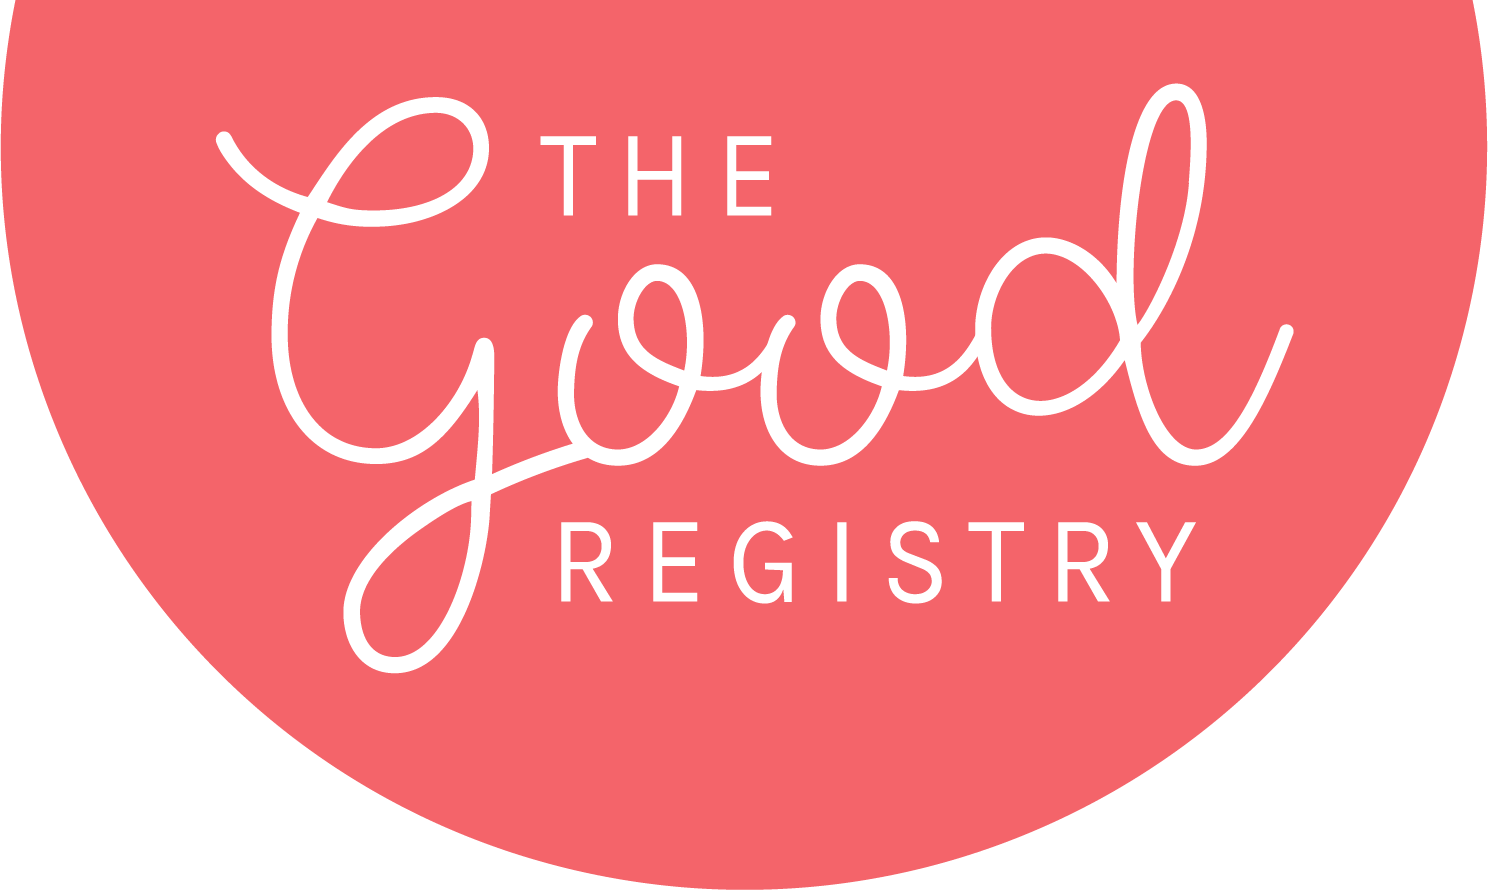 The good registry primary